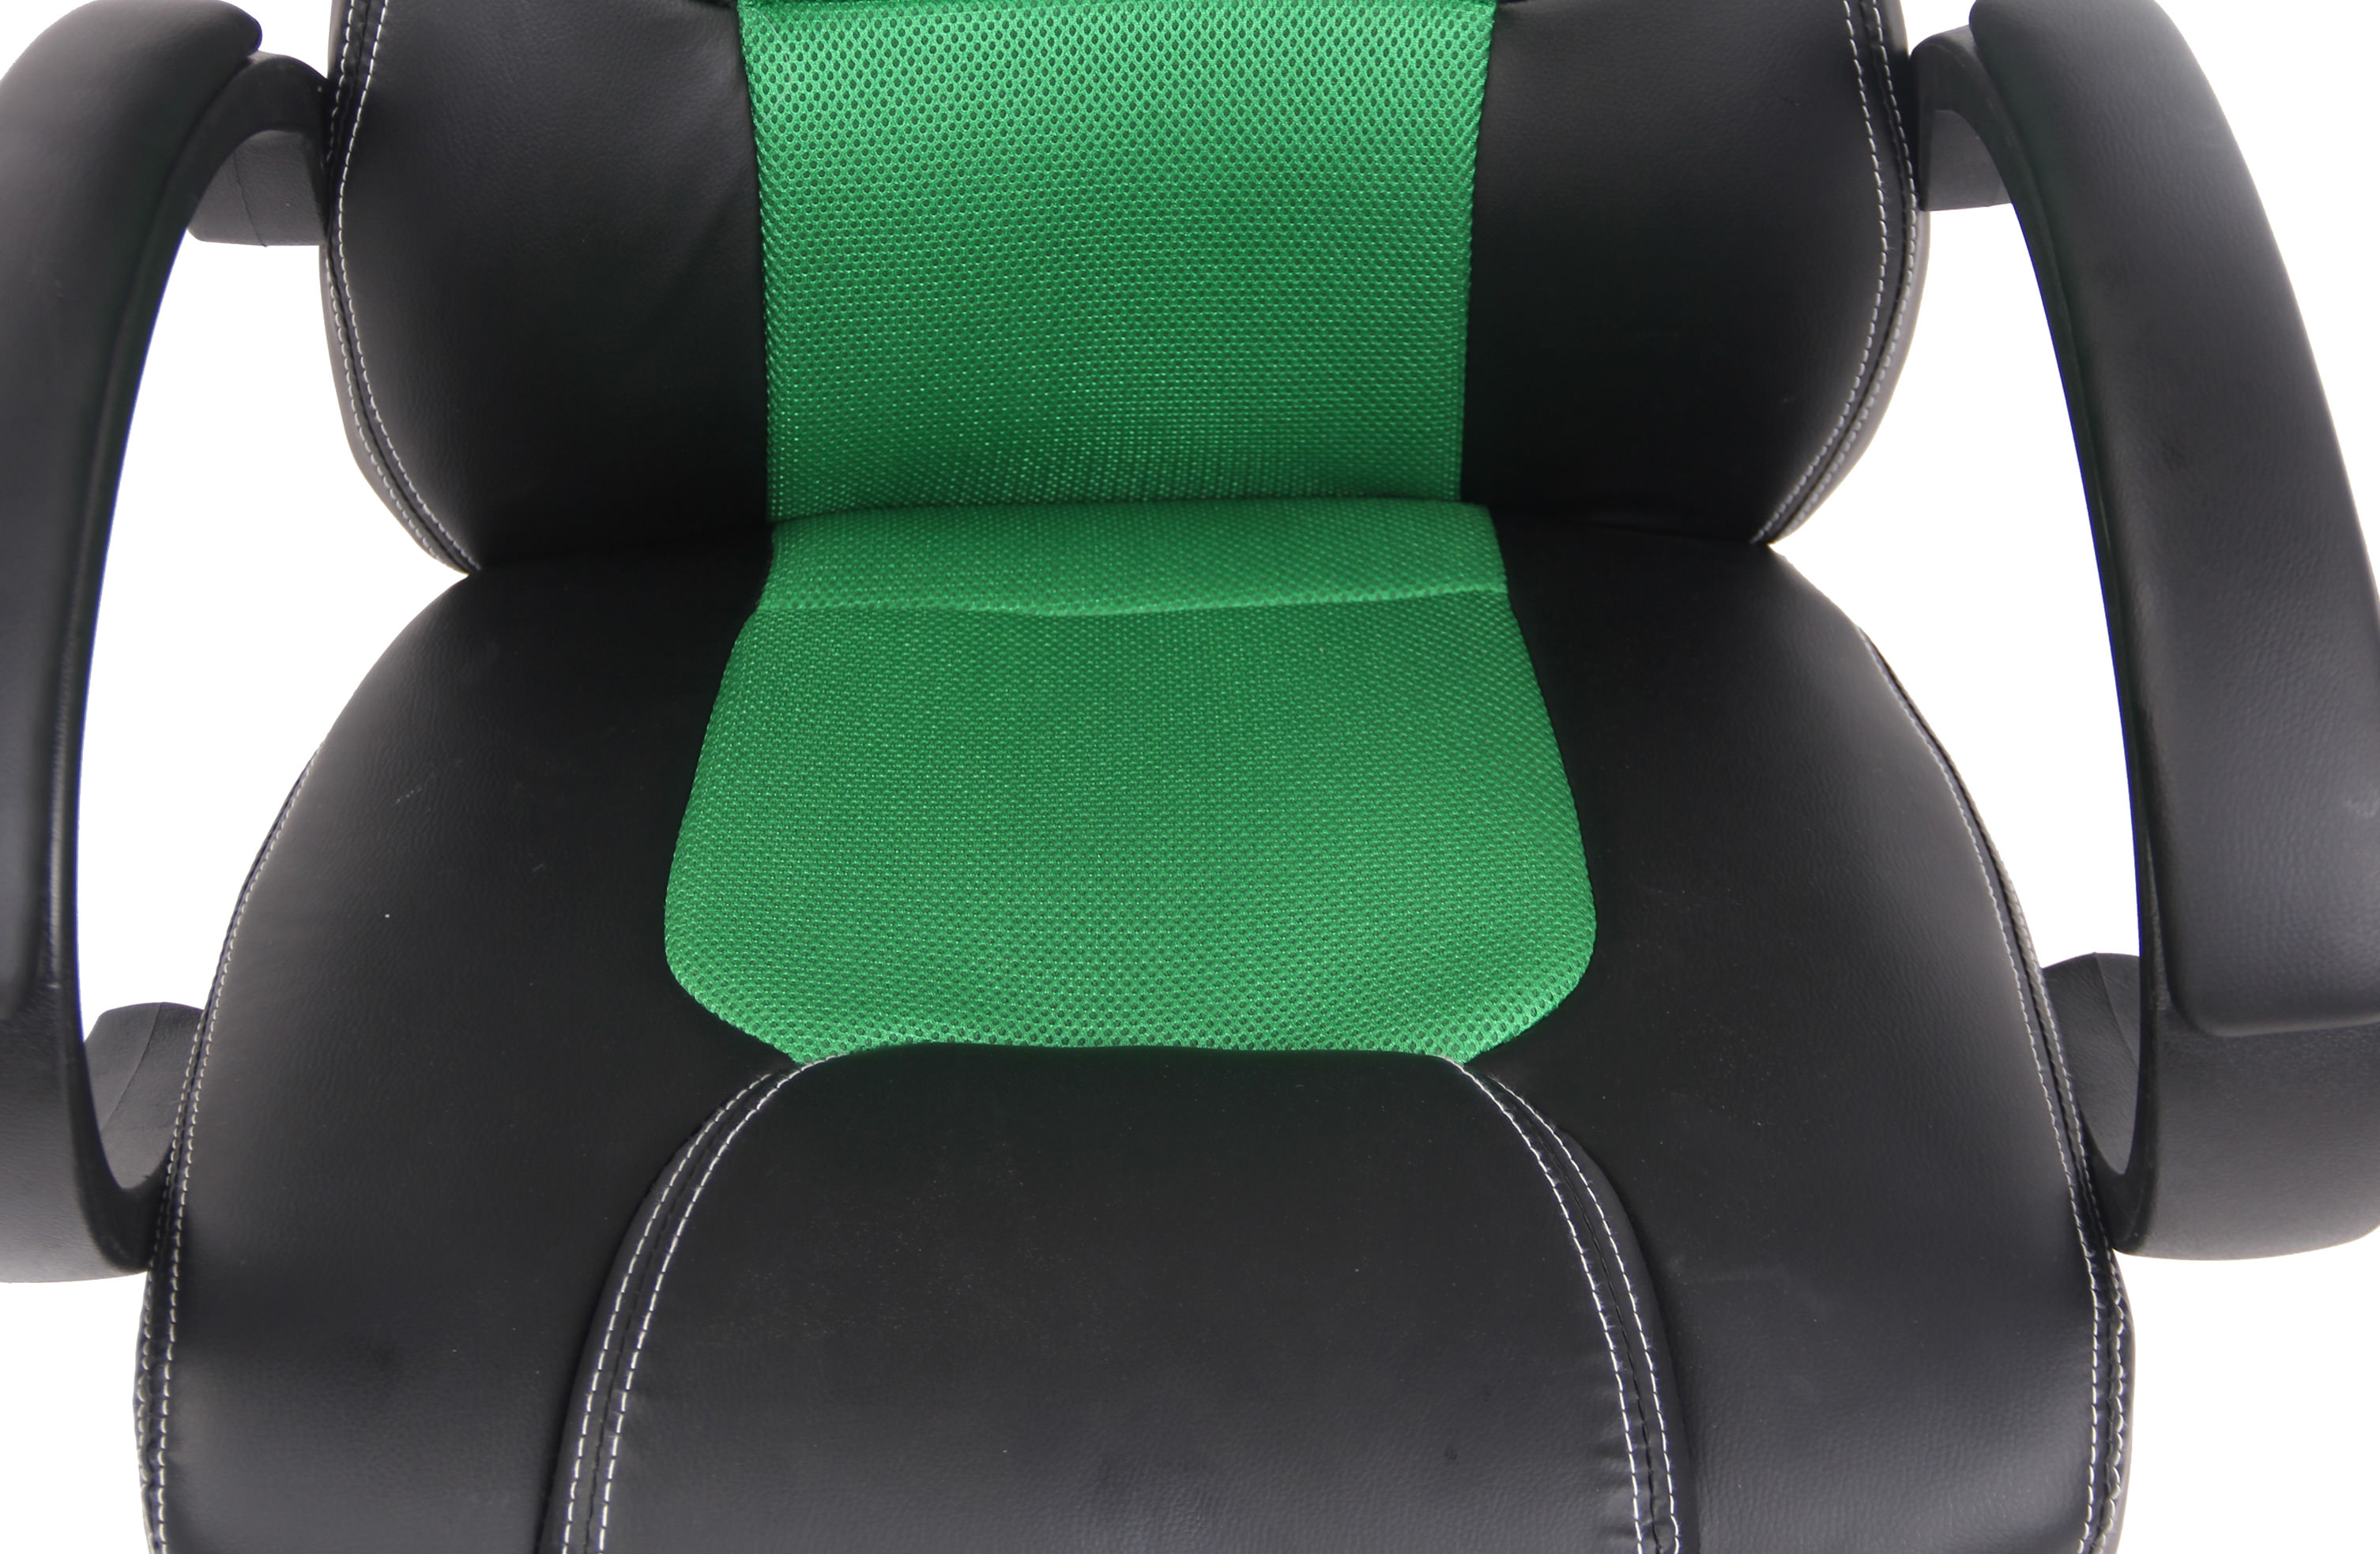 Gaming CLP Fire Chair, Bürostuhl grün Racing